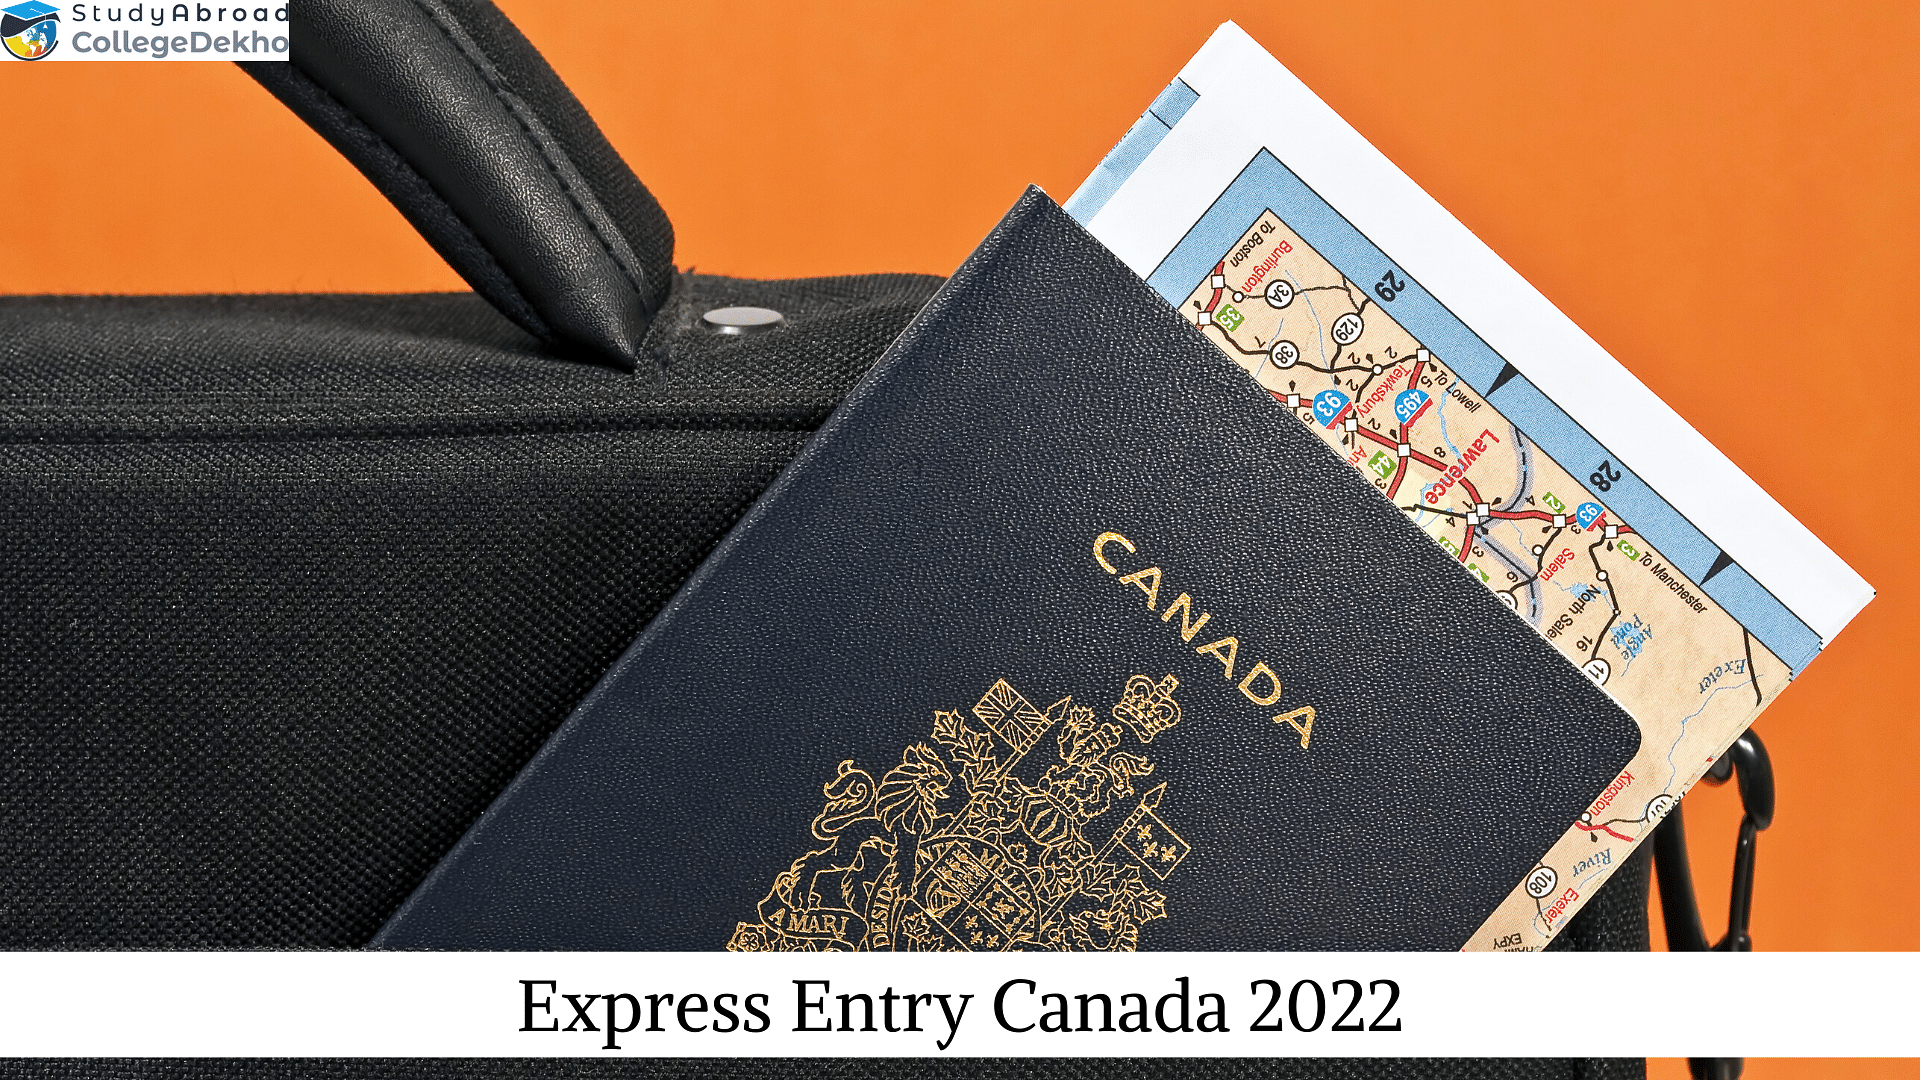 Express Entry Canada 2022